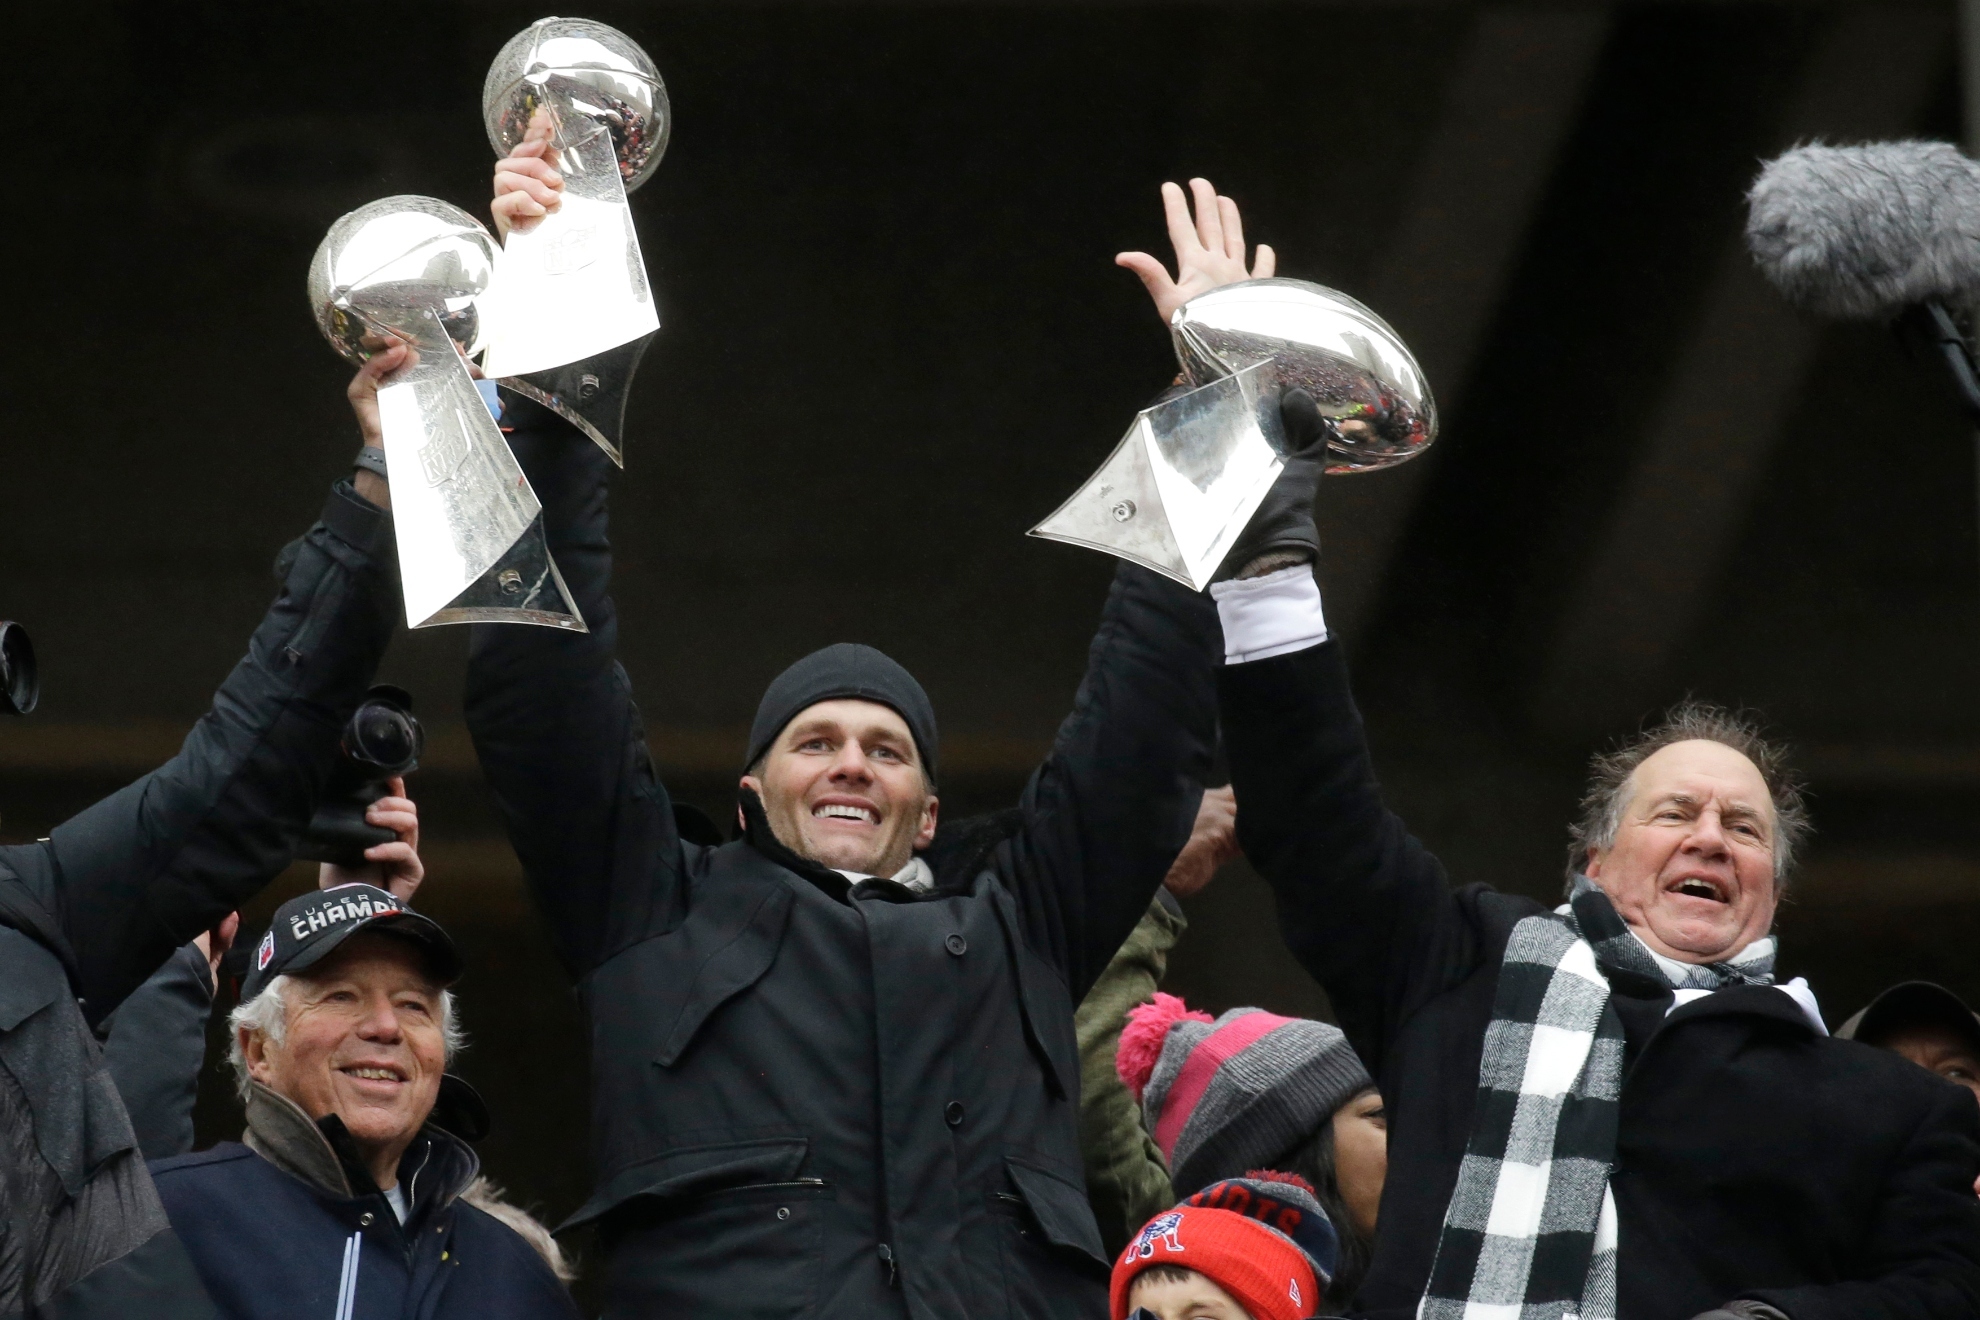 Robert Kraft, Tom Brady and Bill Belichick celebrate another Super Bowl win.